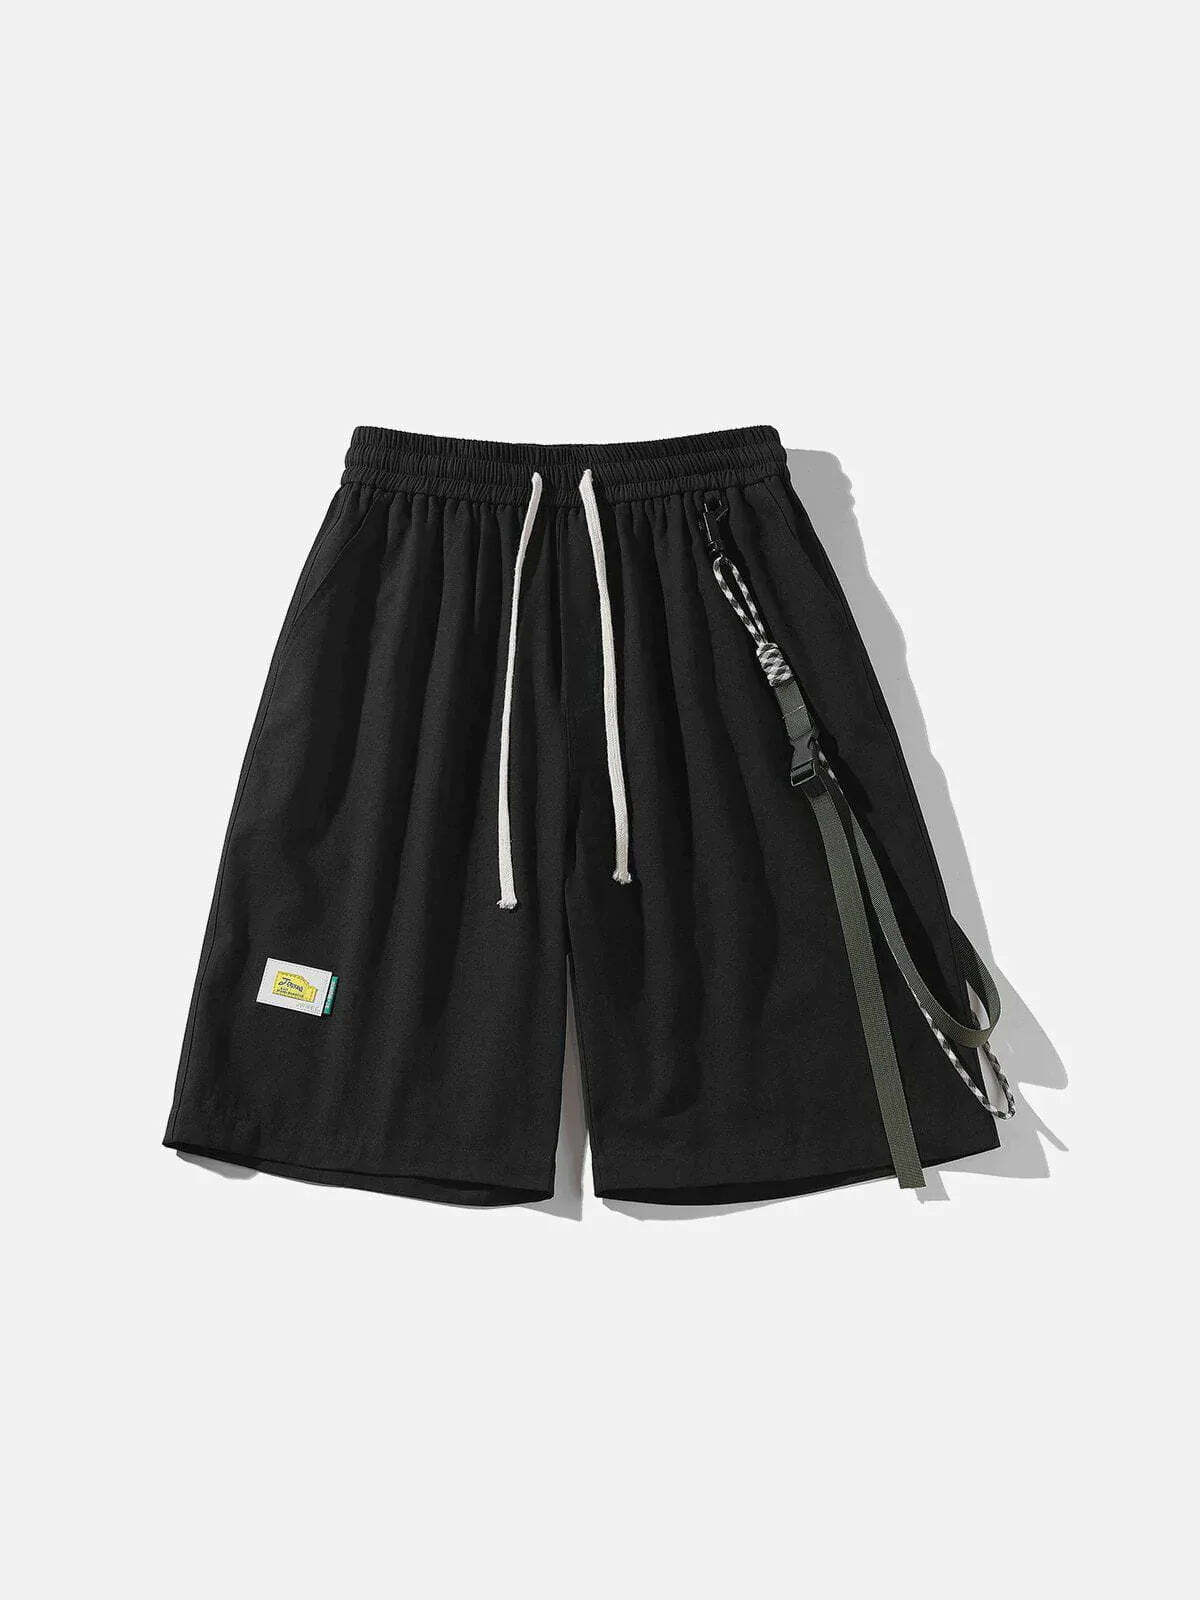 elastic waistband detachable strap shorts edgy cargo style 1421